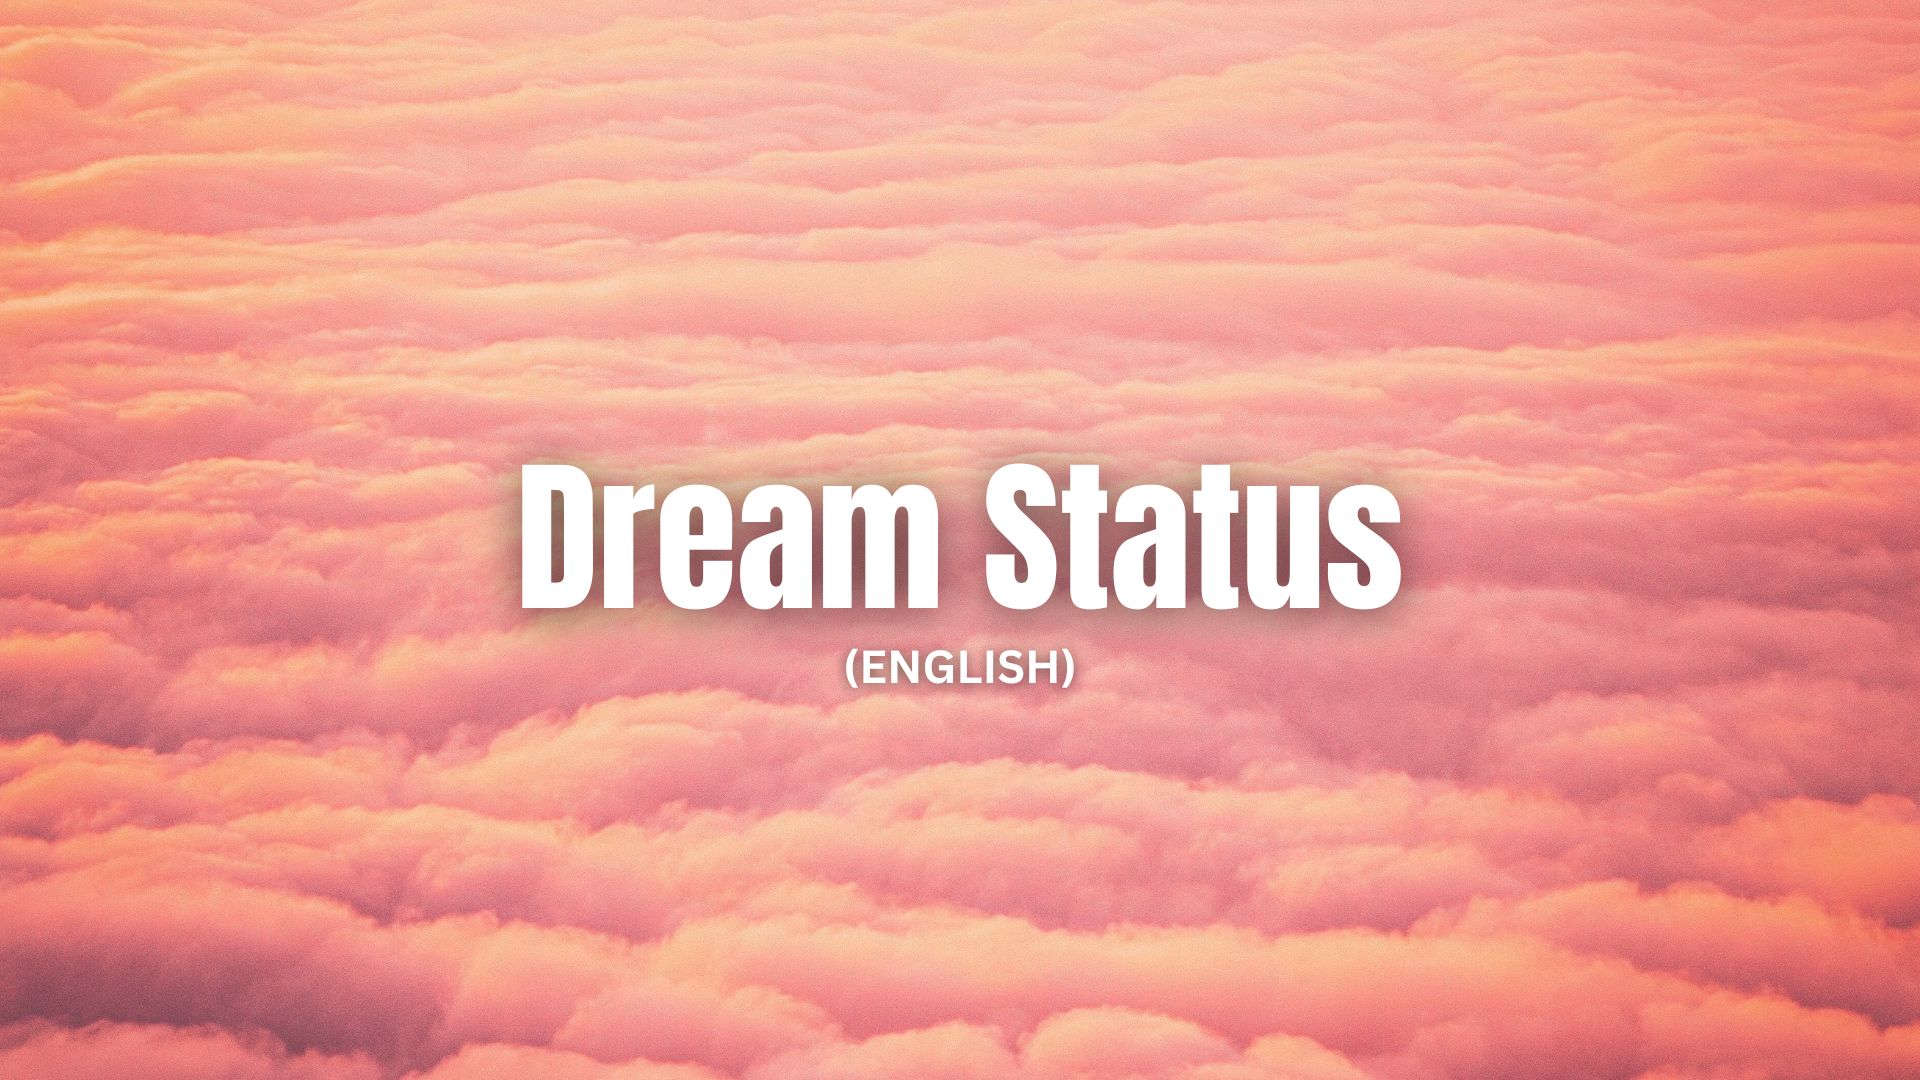 Dreams Status in English